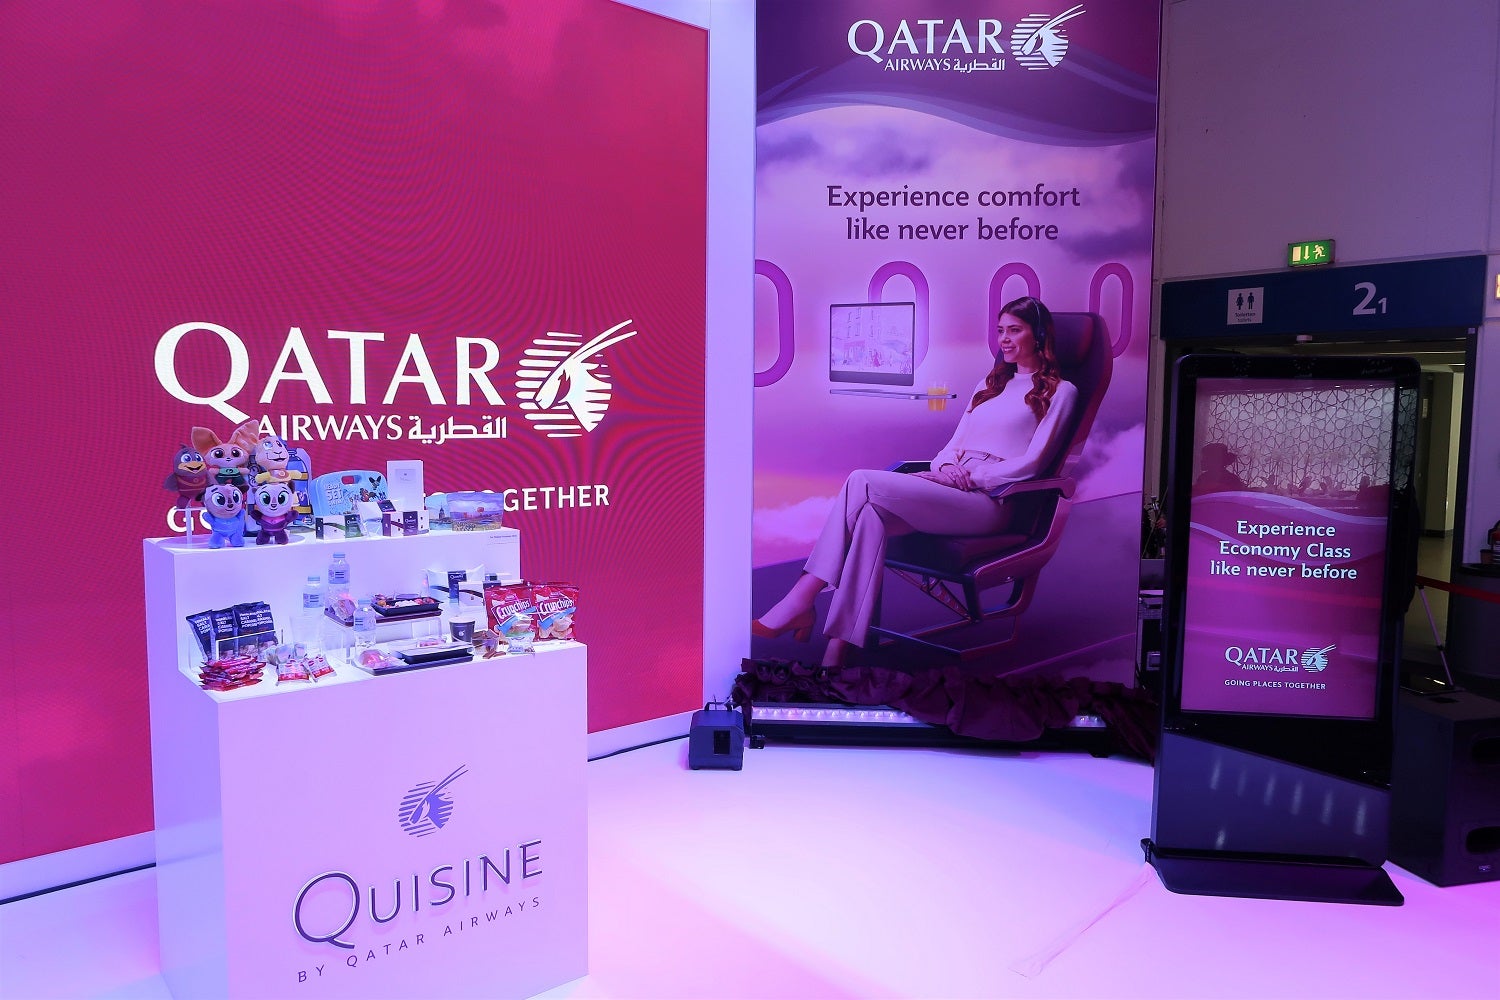 Qatar new economy product